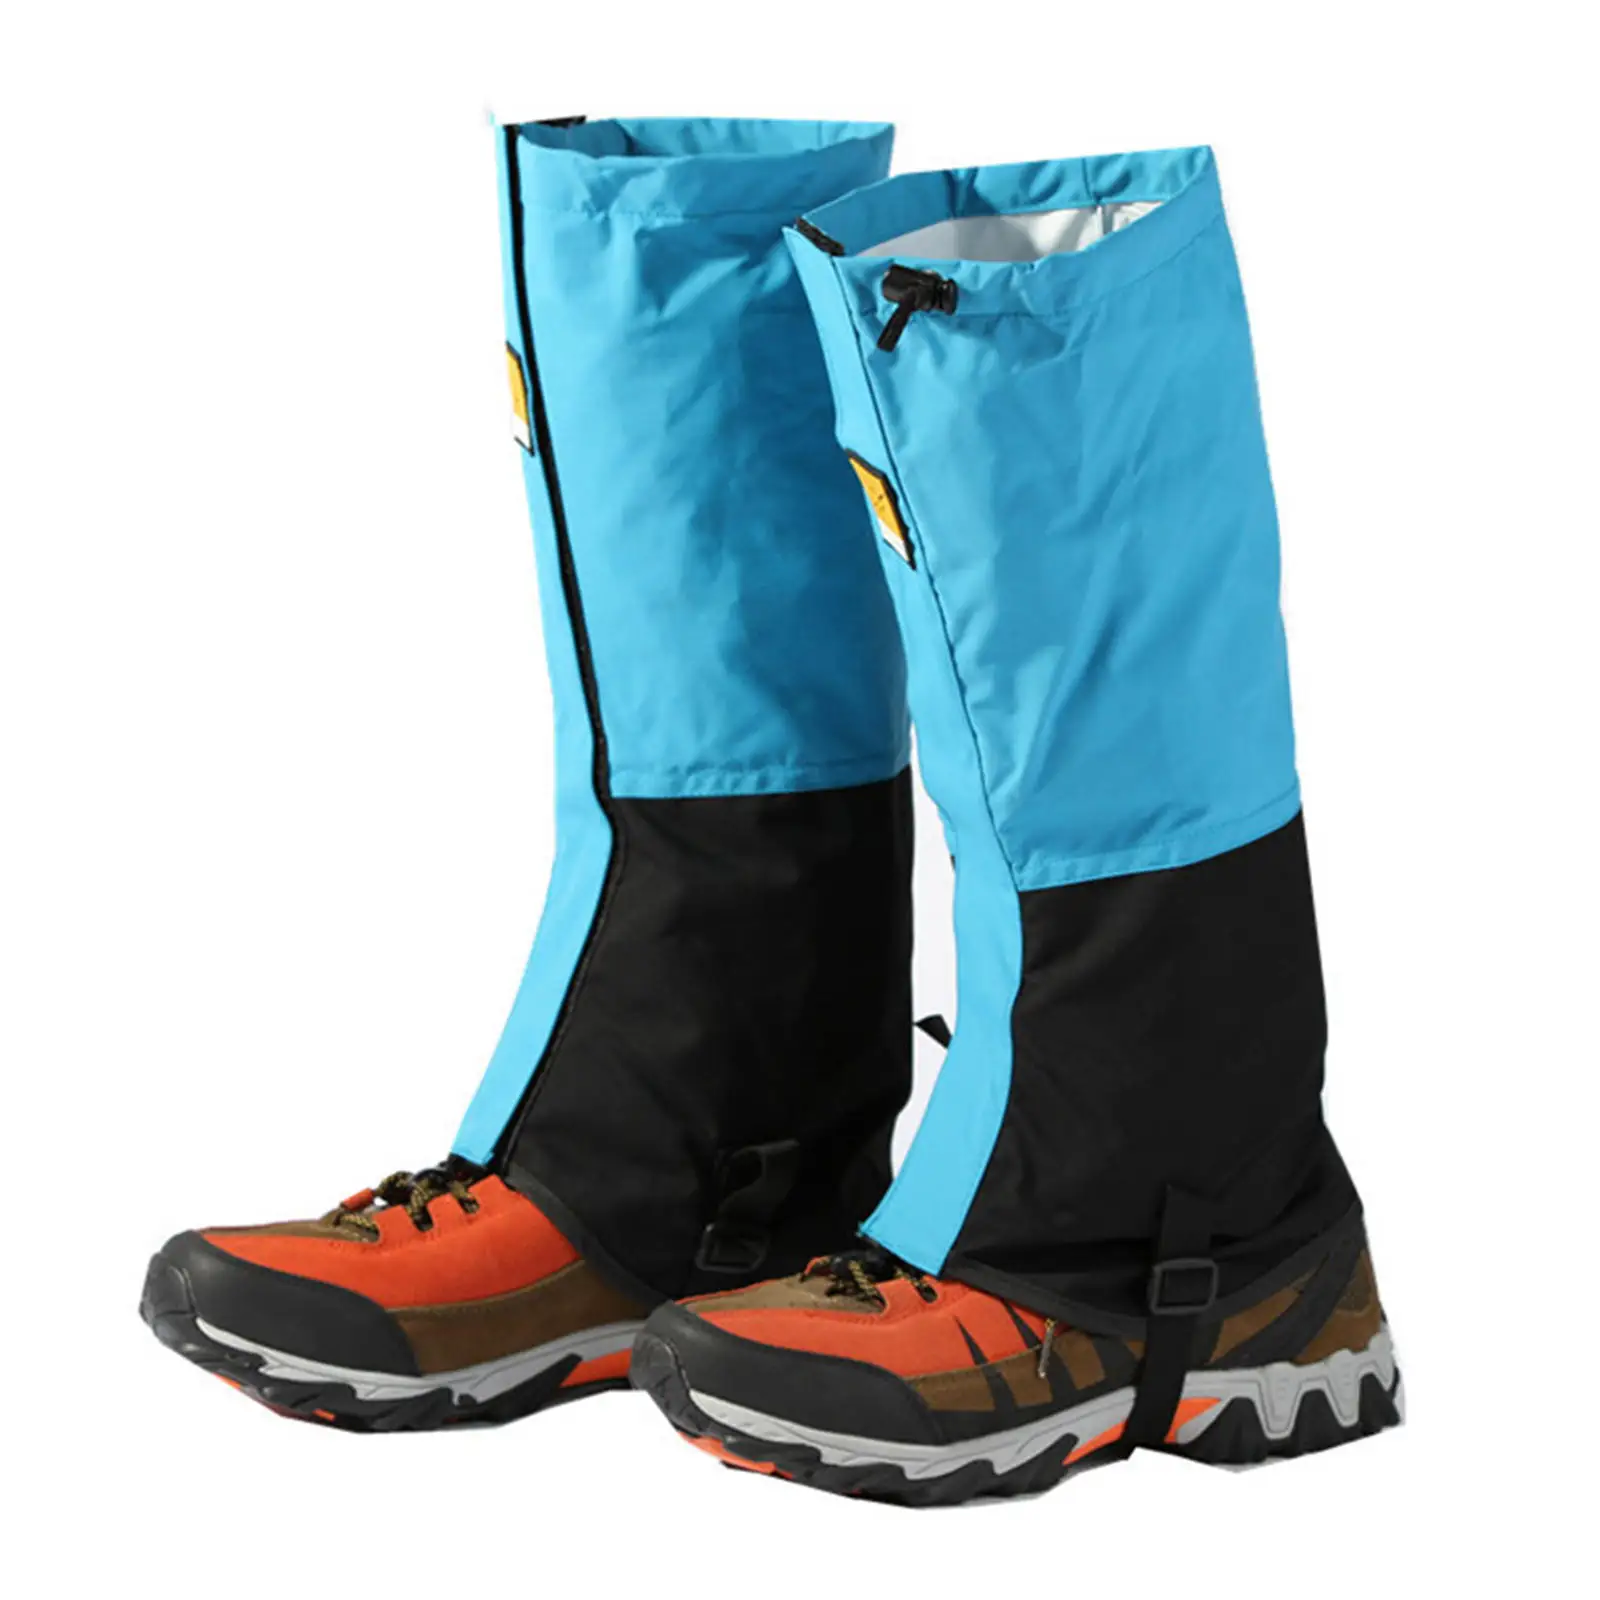 Outdoor Hiking Walking Legging Gaiters Waterproof Leg Covers Hunting Hiking Climbing Camping Ski Travel Leg Warmers Foot Covers